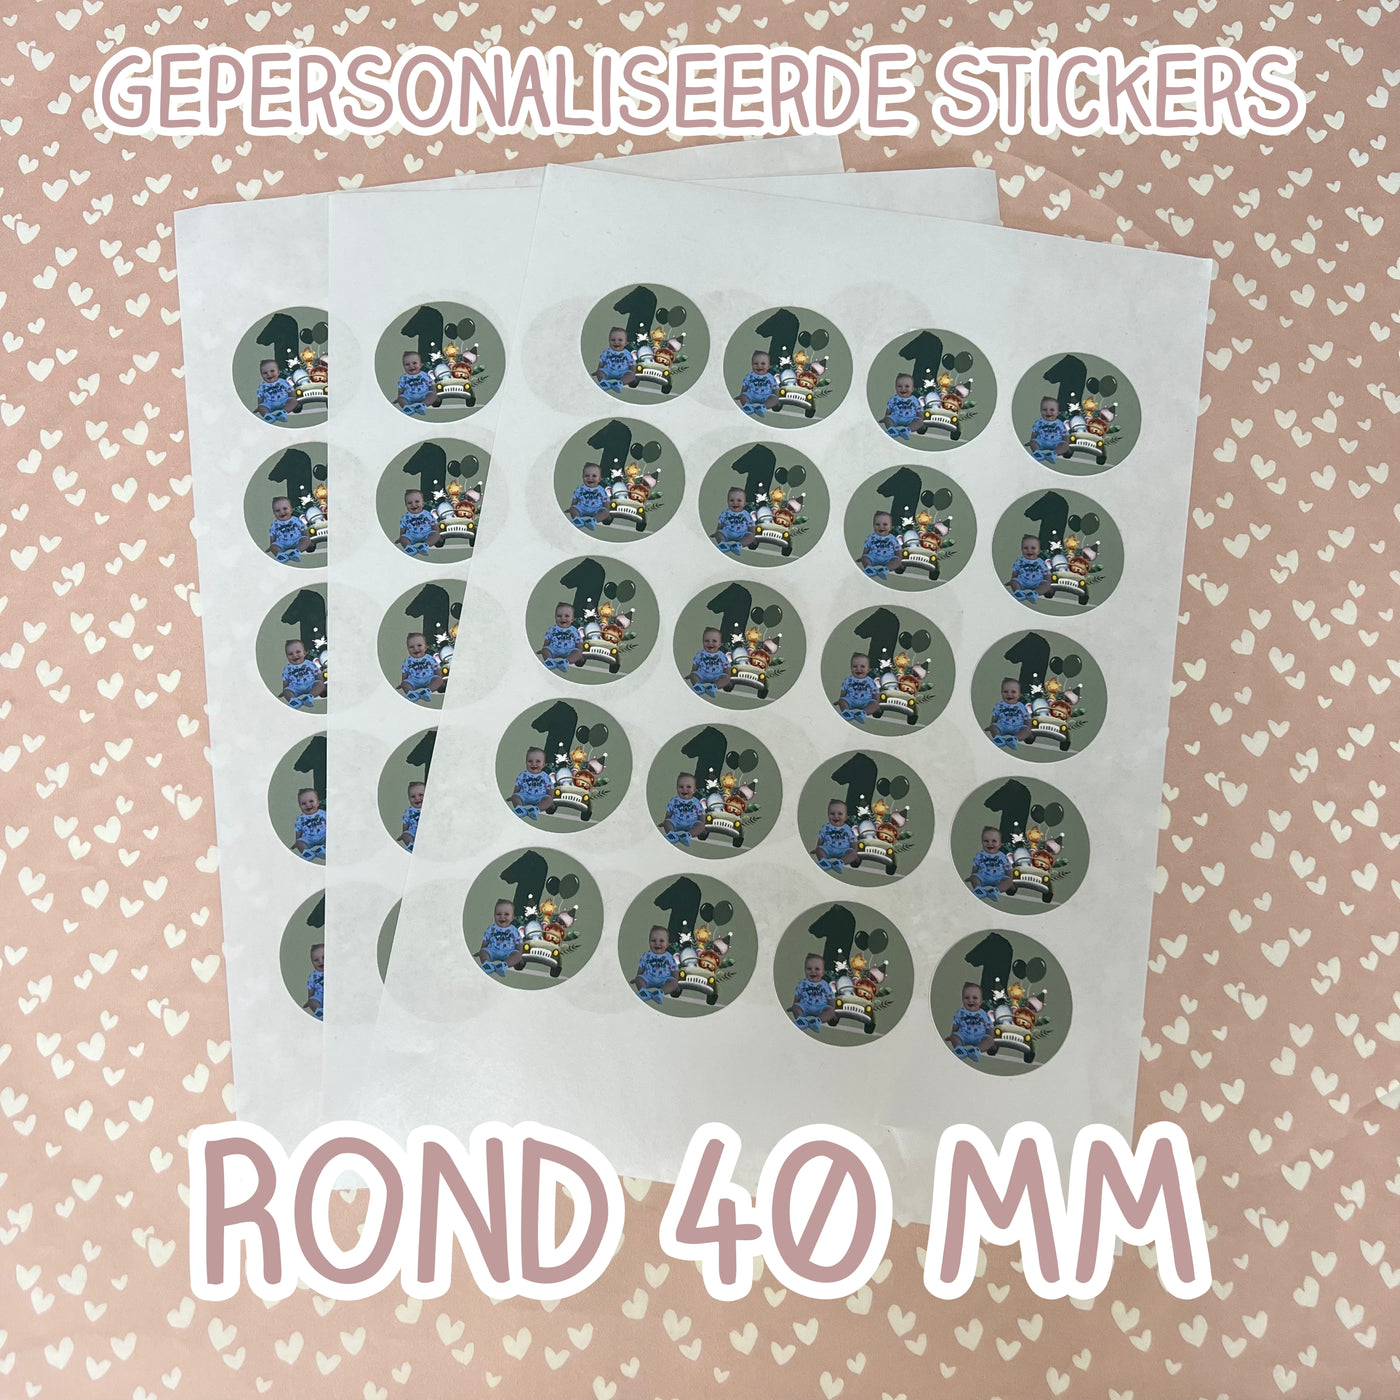 Gepersonaliseerde Stickers - Rond 40mm